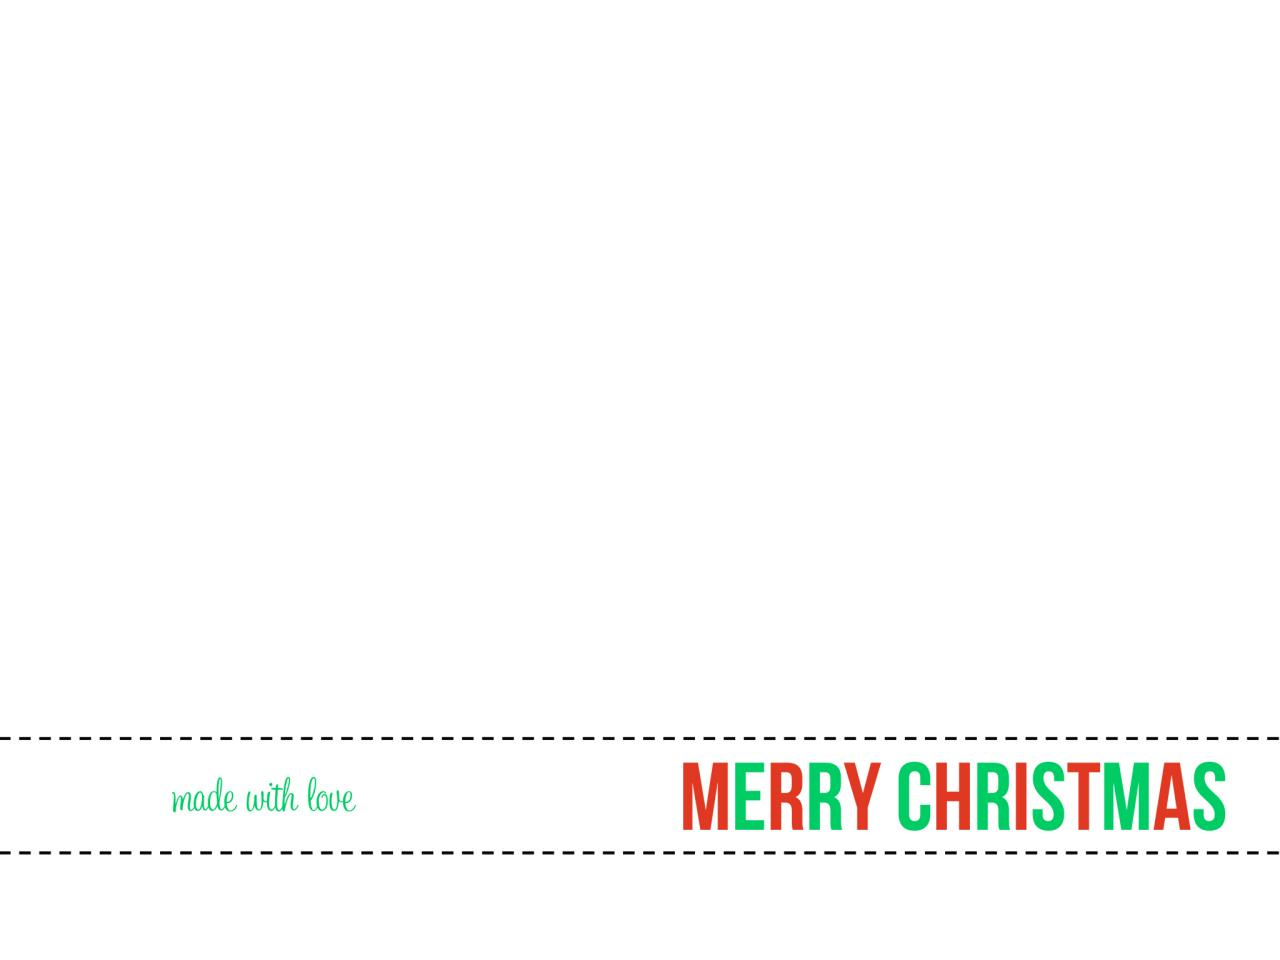 Microsoft Word Blank Gift Tag Template Ms Christmas Editable With Microsoft Word Label Printing Templates